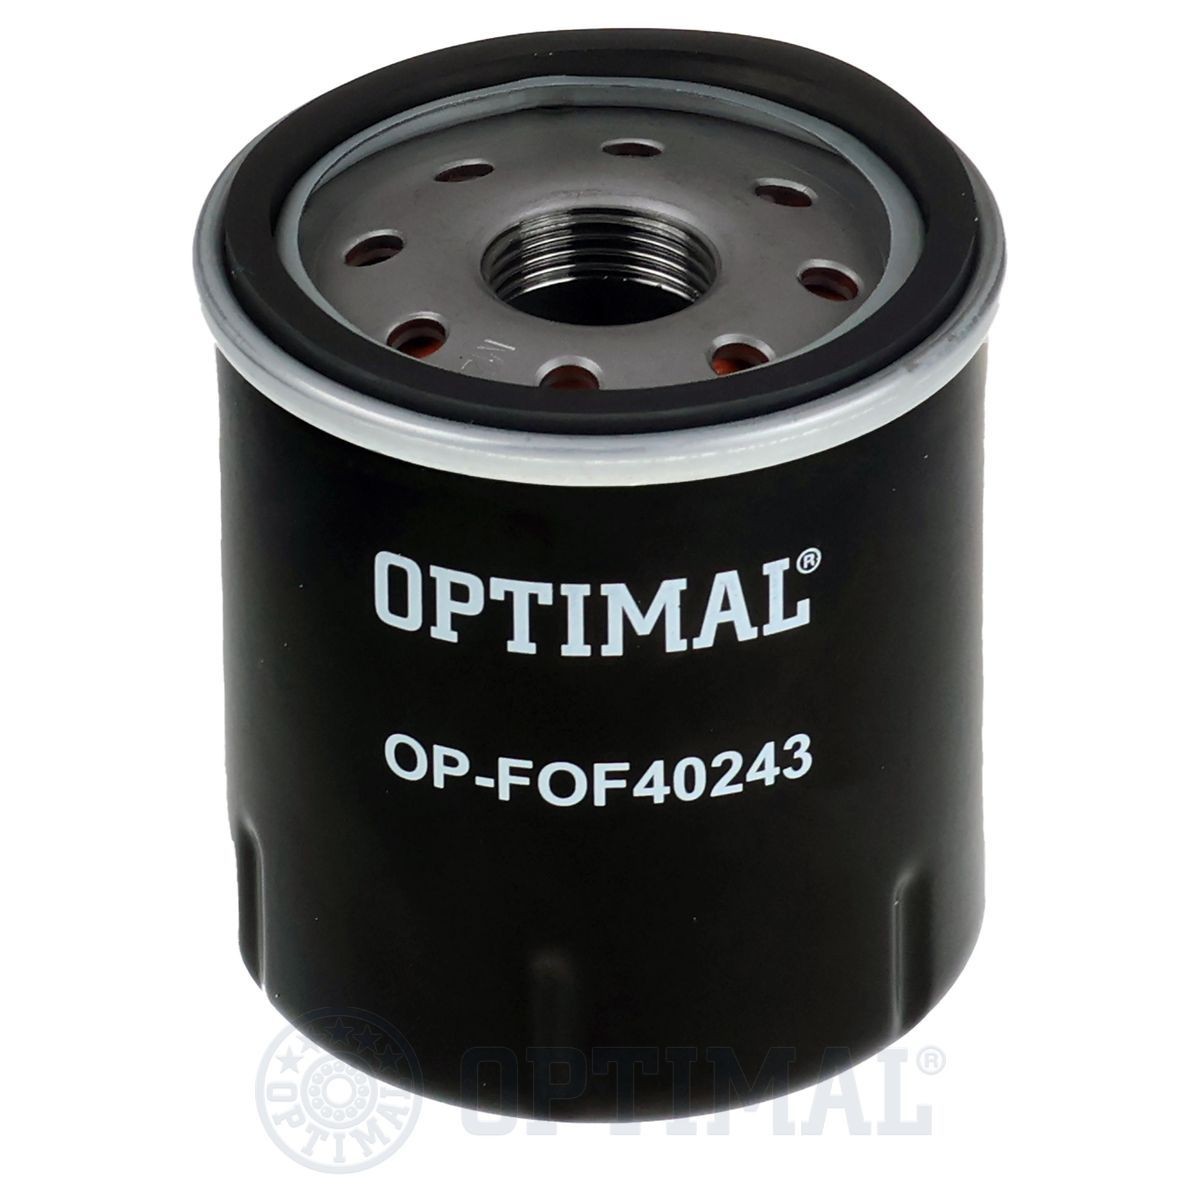 OPTIMAL OP-FOF40243 Oil filter 7 700 867 824